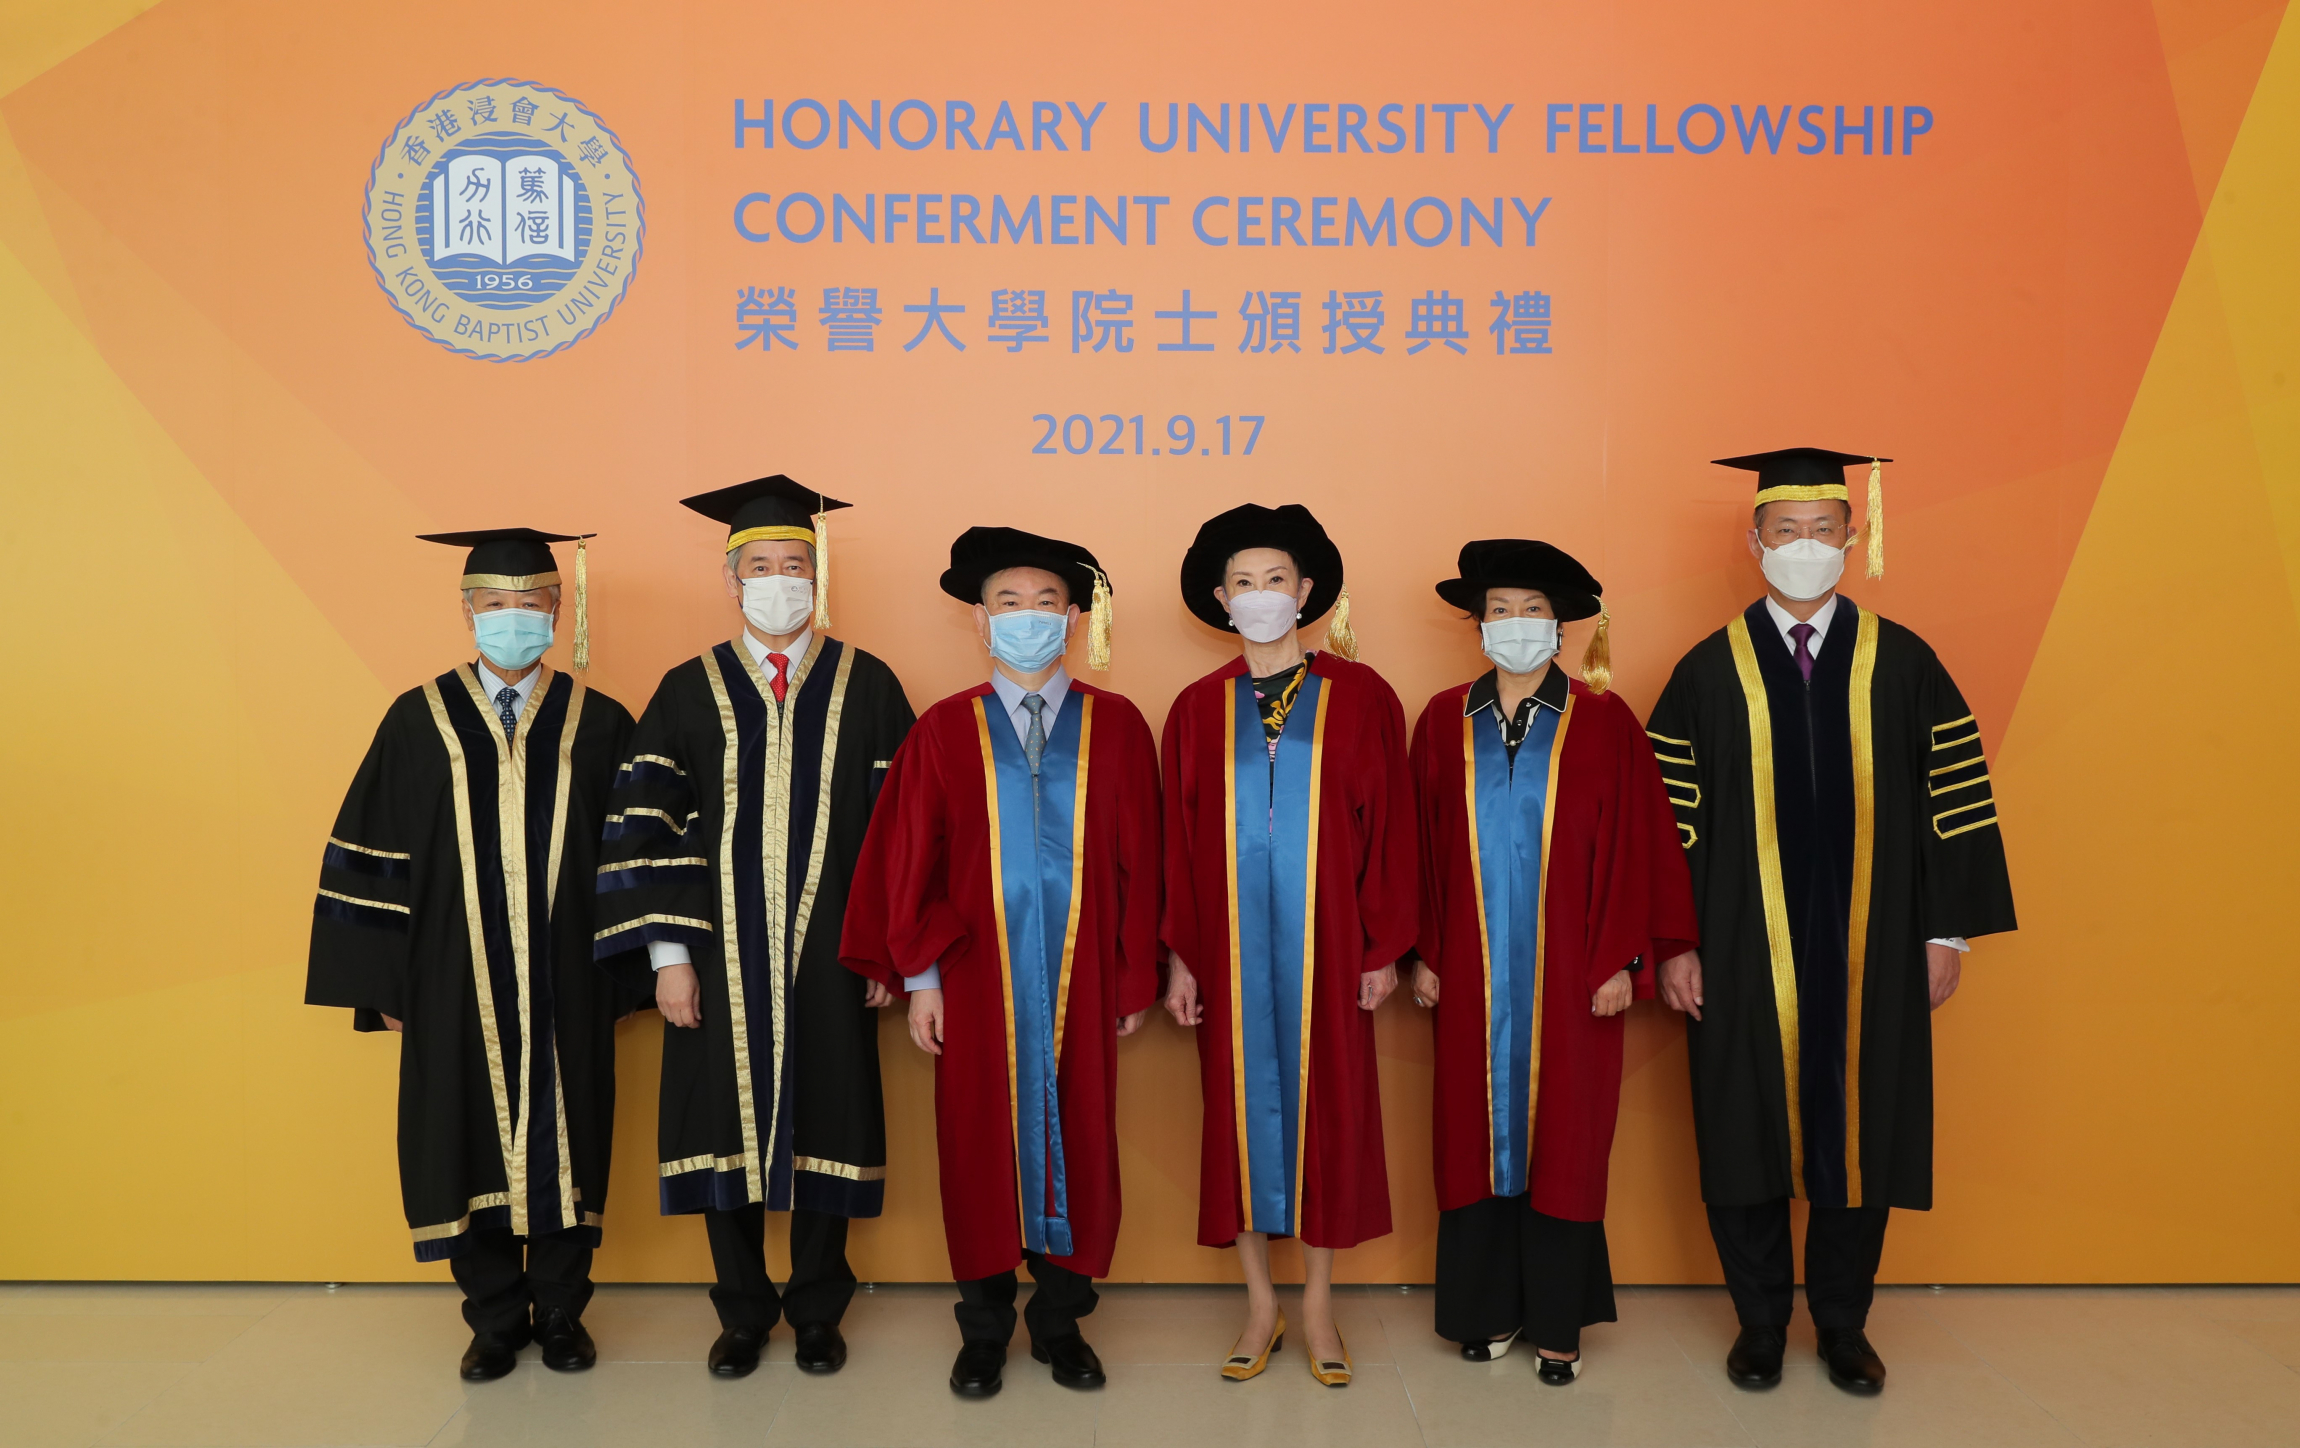 HKBU's 16th Honorary University Fellowship Conferment Ceremony